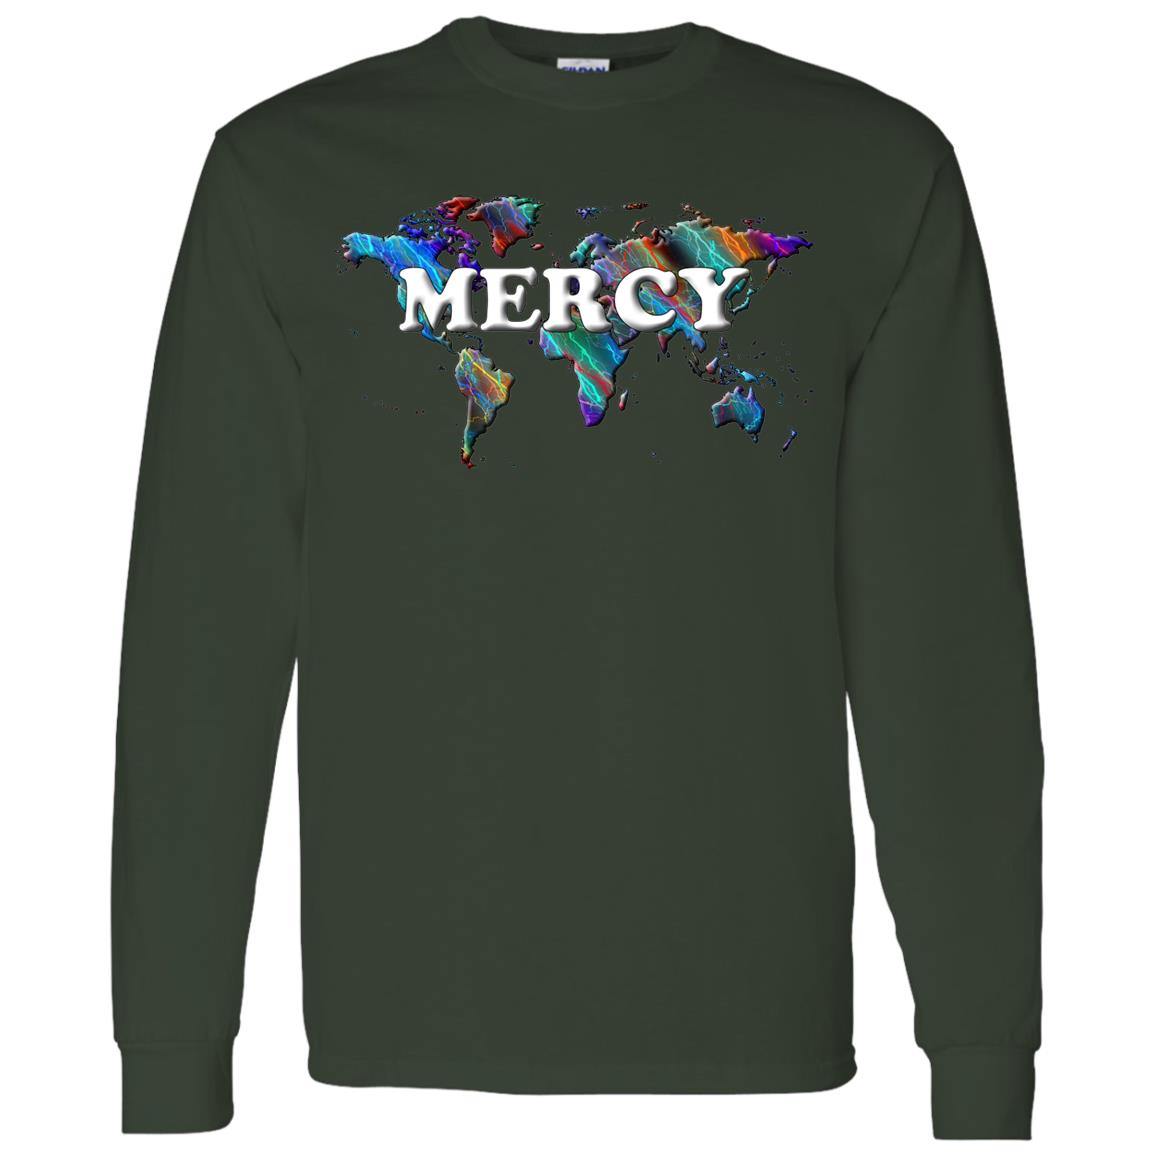 Mercy Long Sleeve T-Shirt